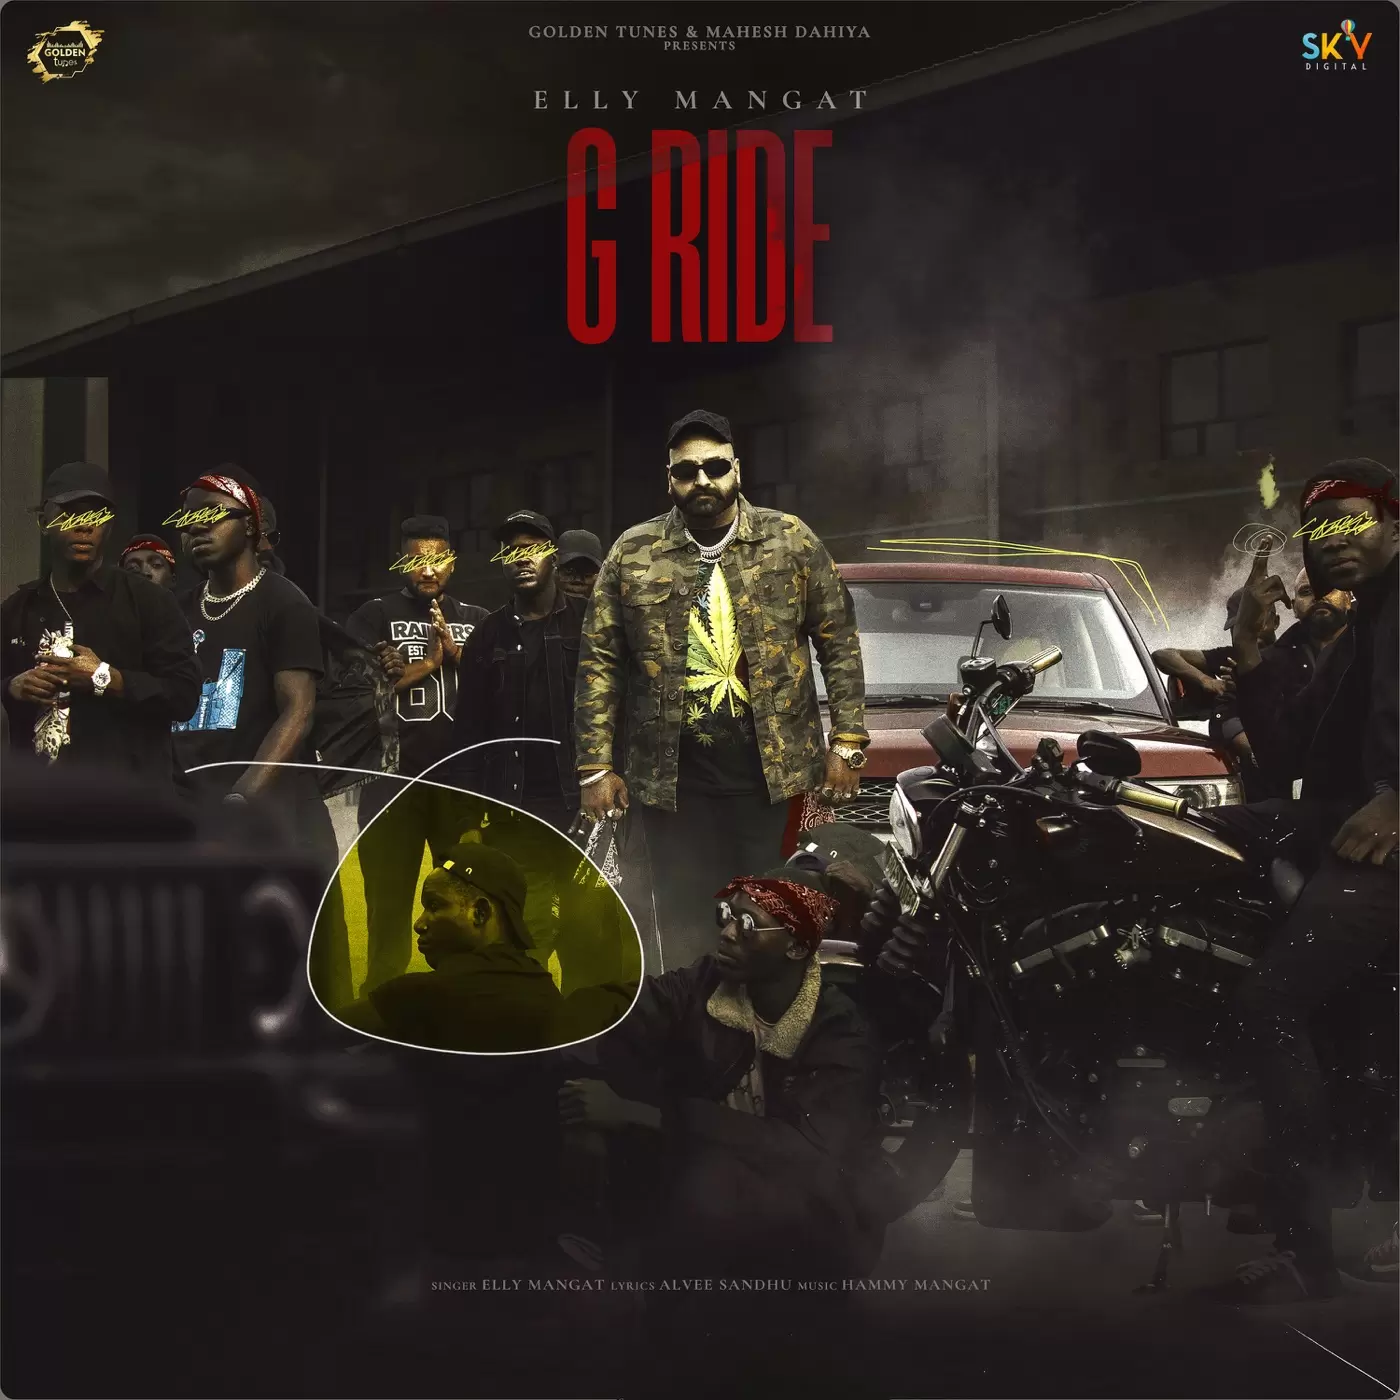 G Ride - Single Song by Elly Mangat - Mr-Punjab